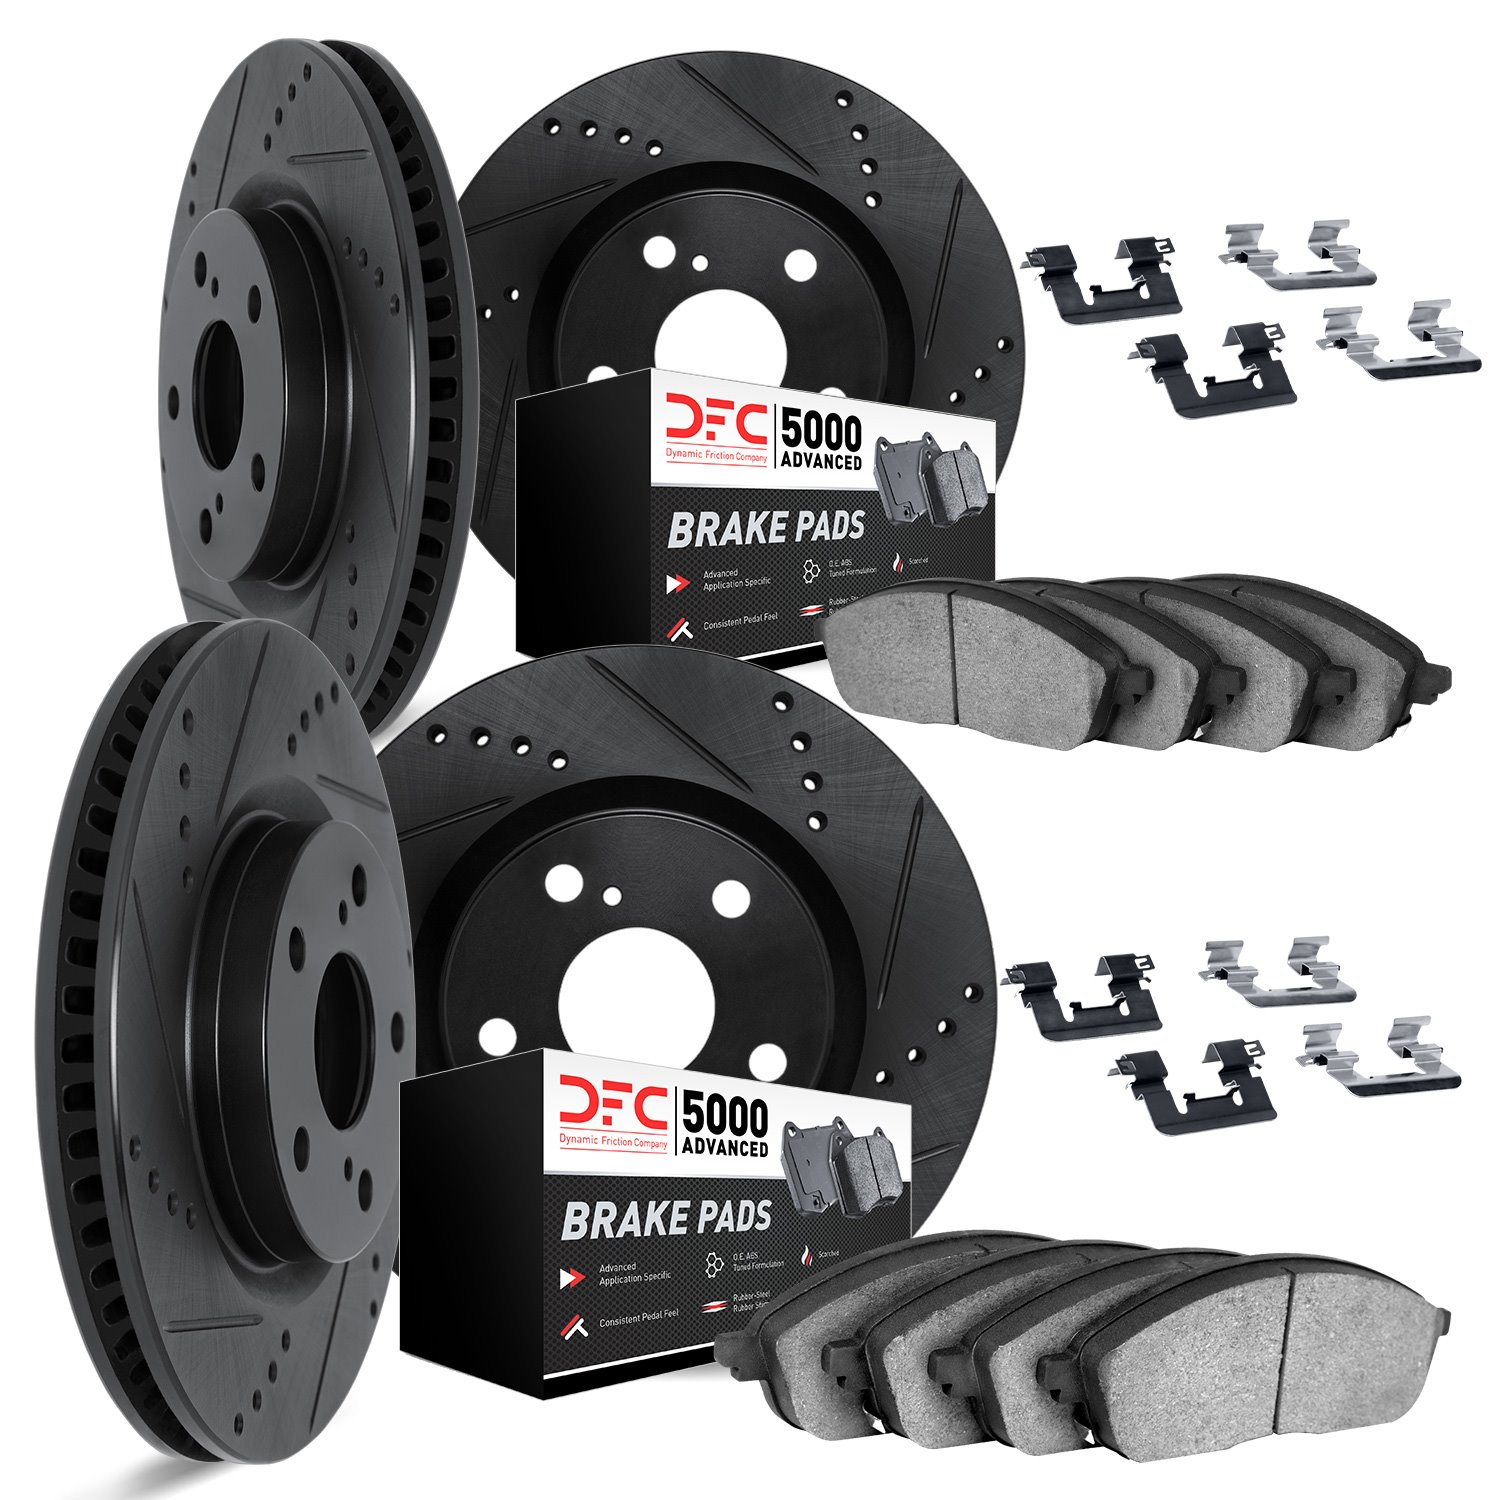 8514-21011 Drilled/Slotted Brake Rotors w/5000 Advanced Brake Pads Kit & Hardware [Black], Fits Select Kia/Hyundai/Genesis, Posi